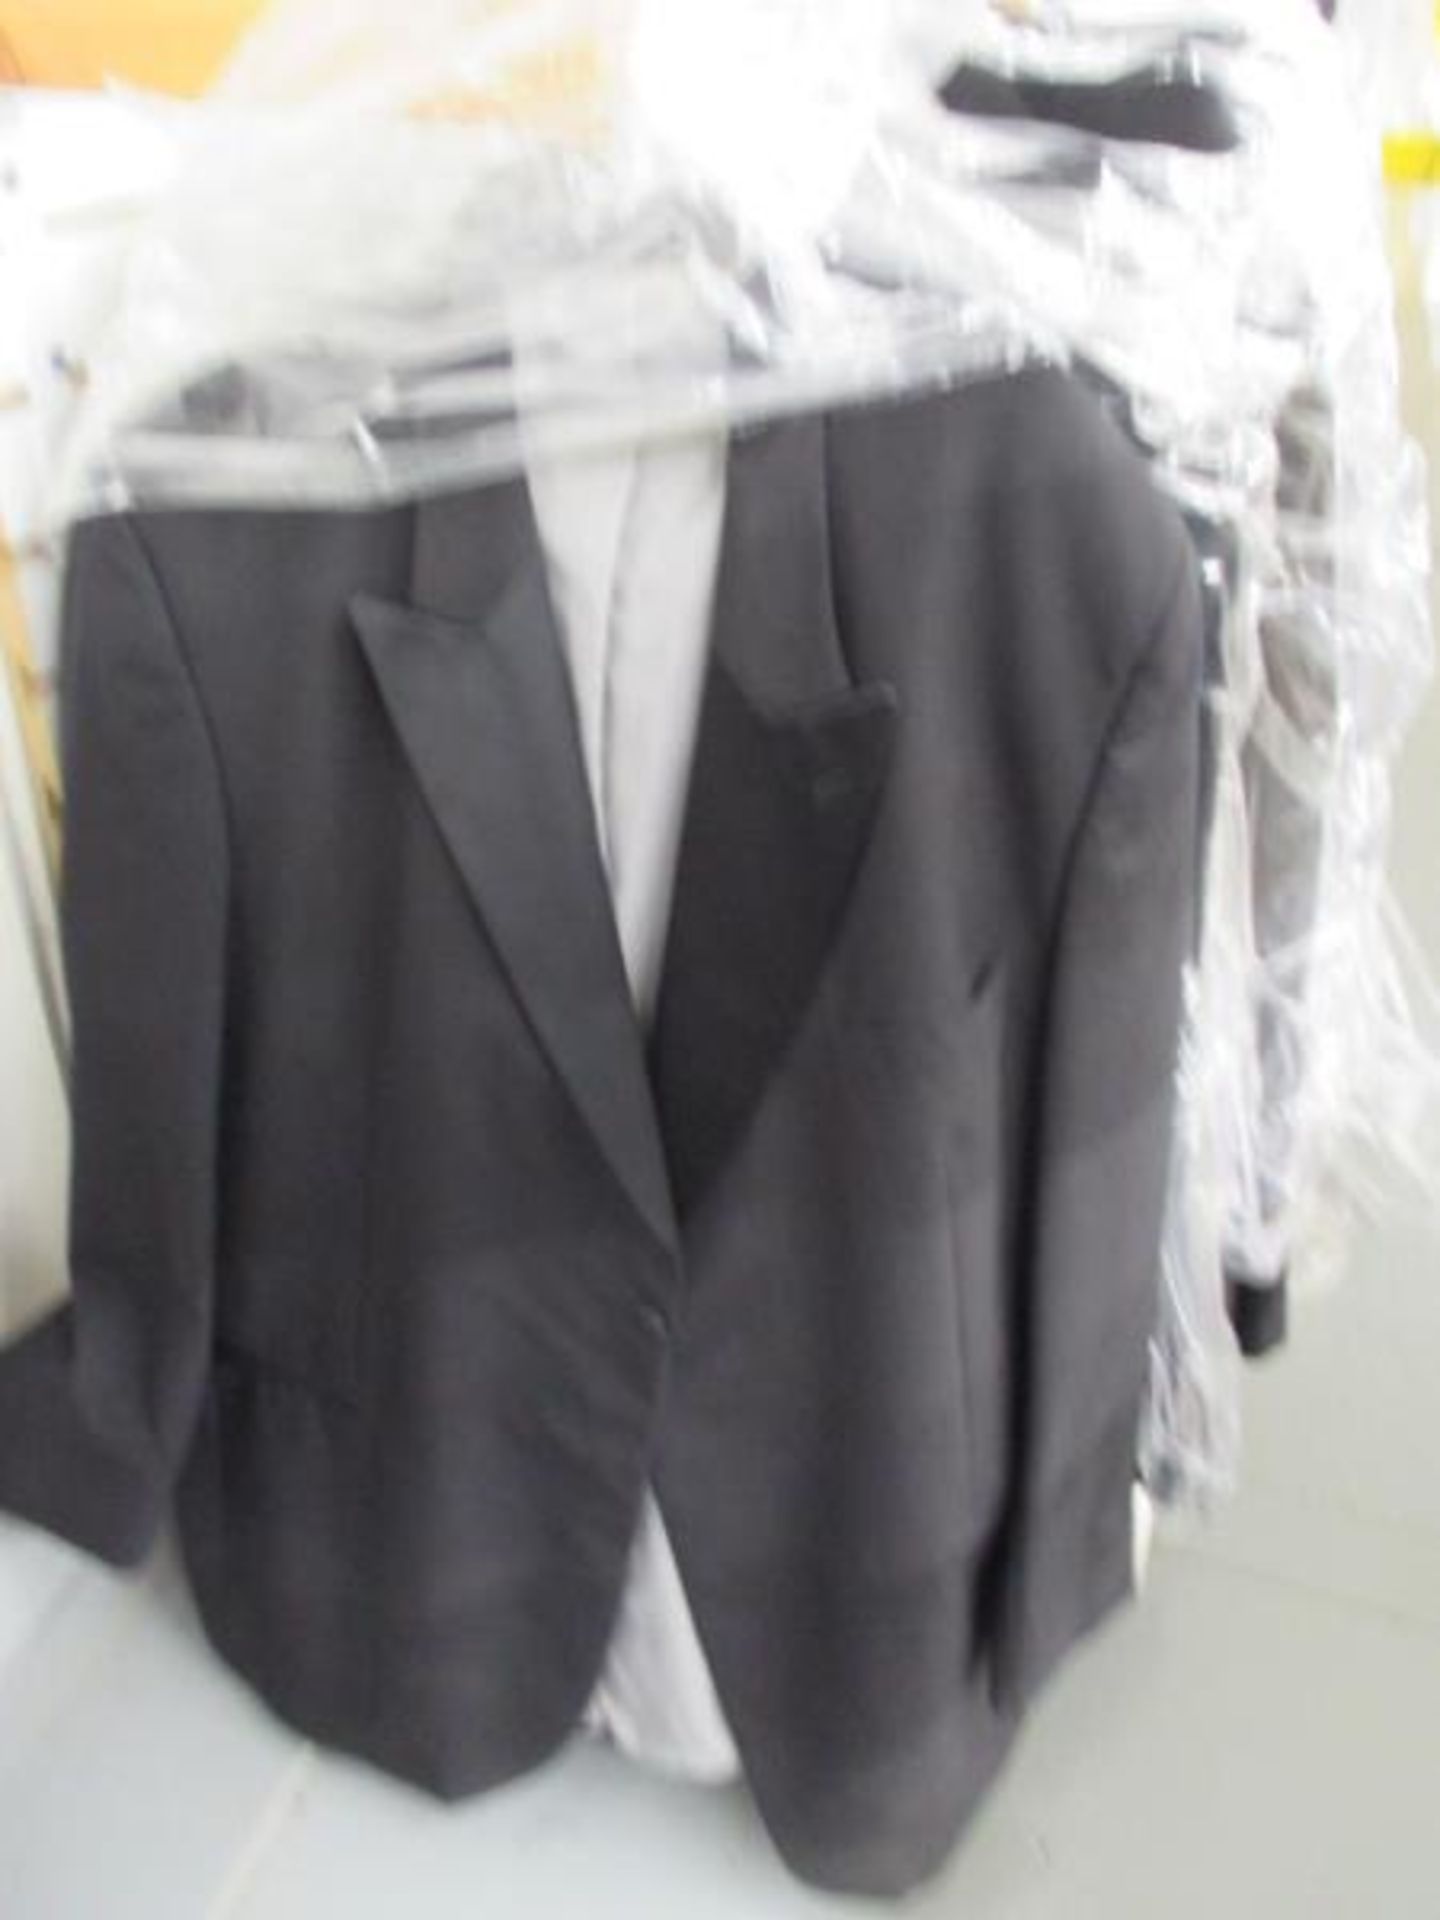 Lot Rental Mens Tux Jackets, Black, White, Dual Color, Etc, Approx. 1000 - Image 16 of 25